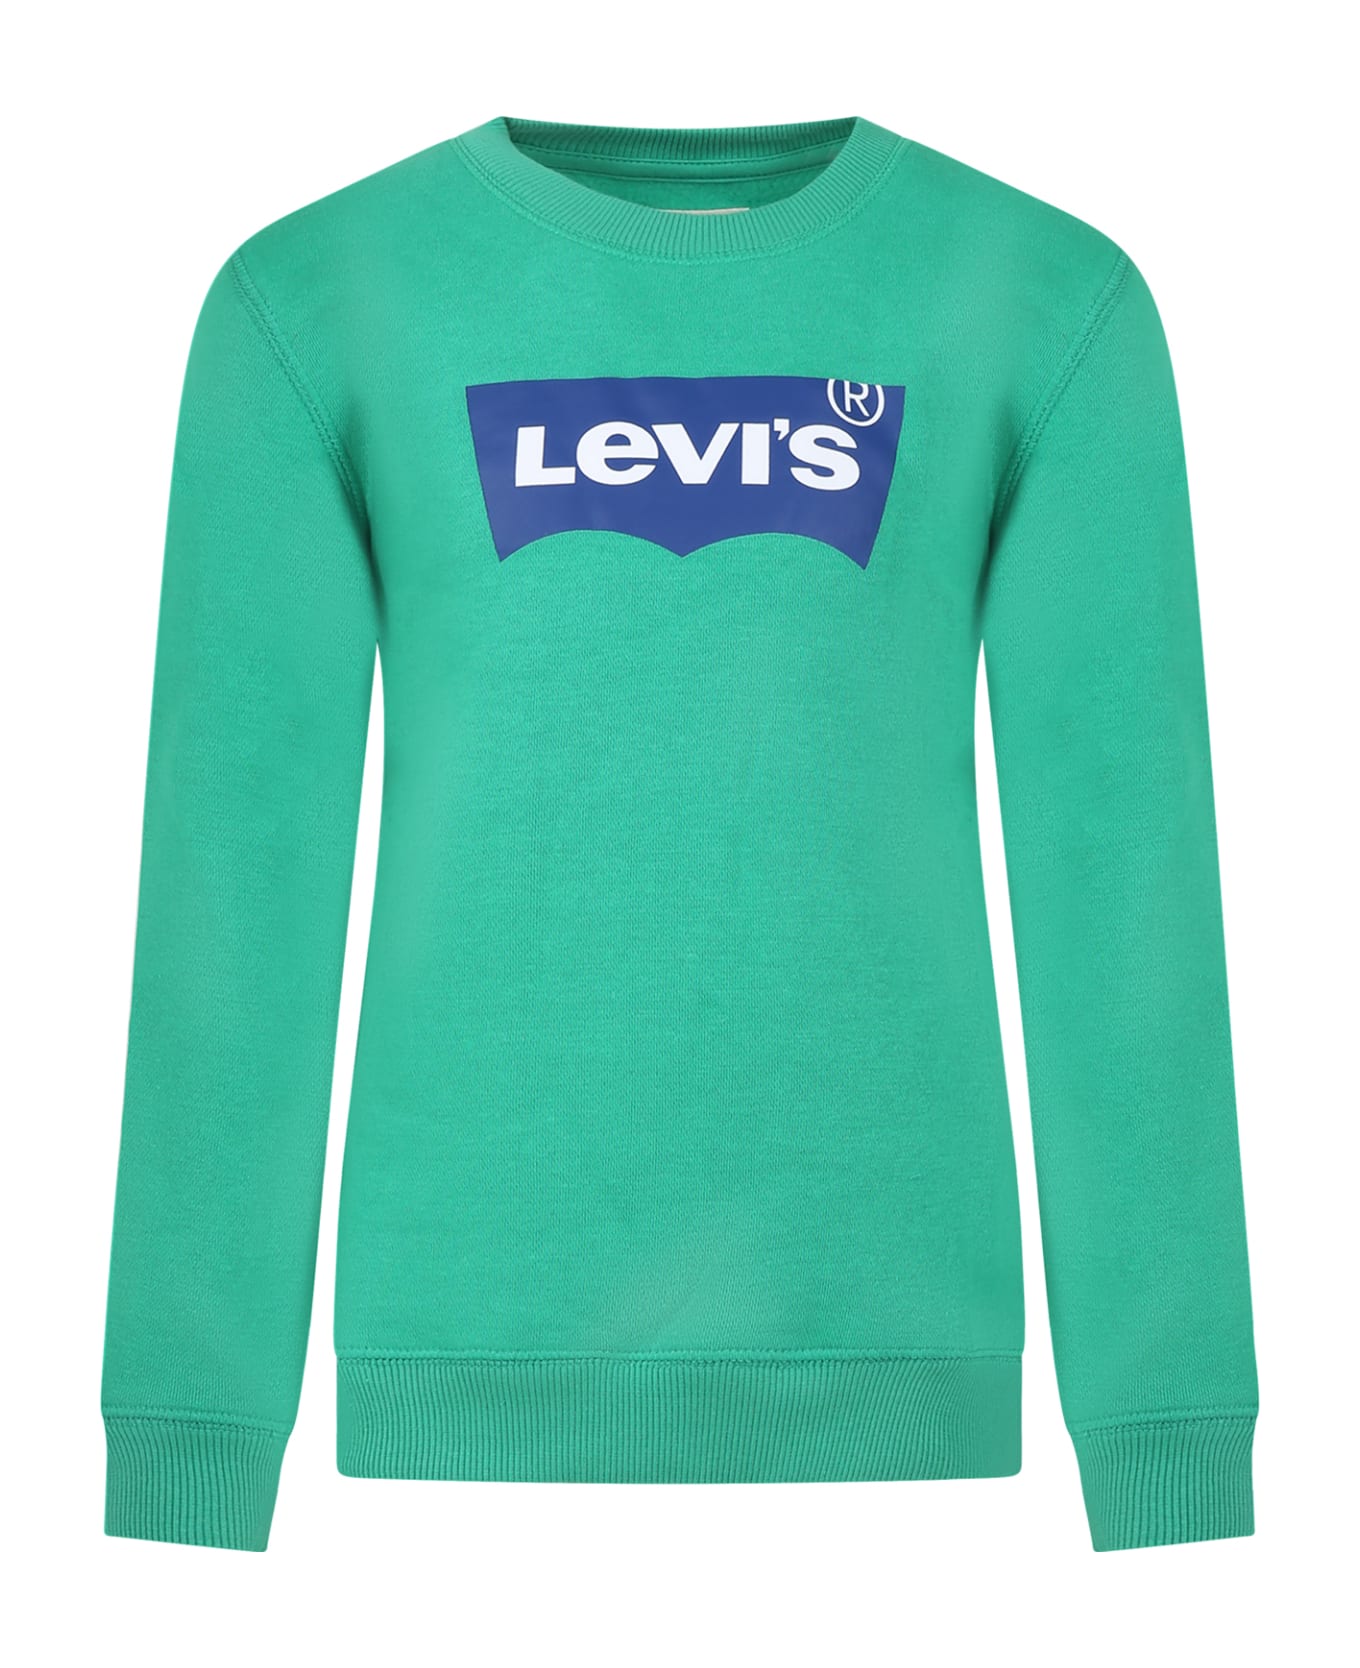 Levi's Green Sweatshirt For Kids With Logo - Green